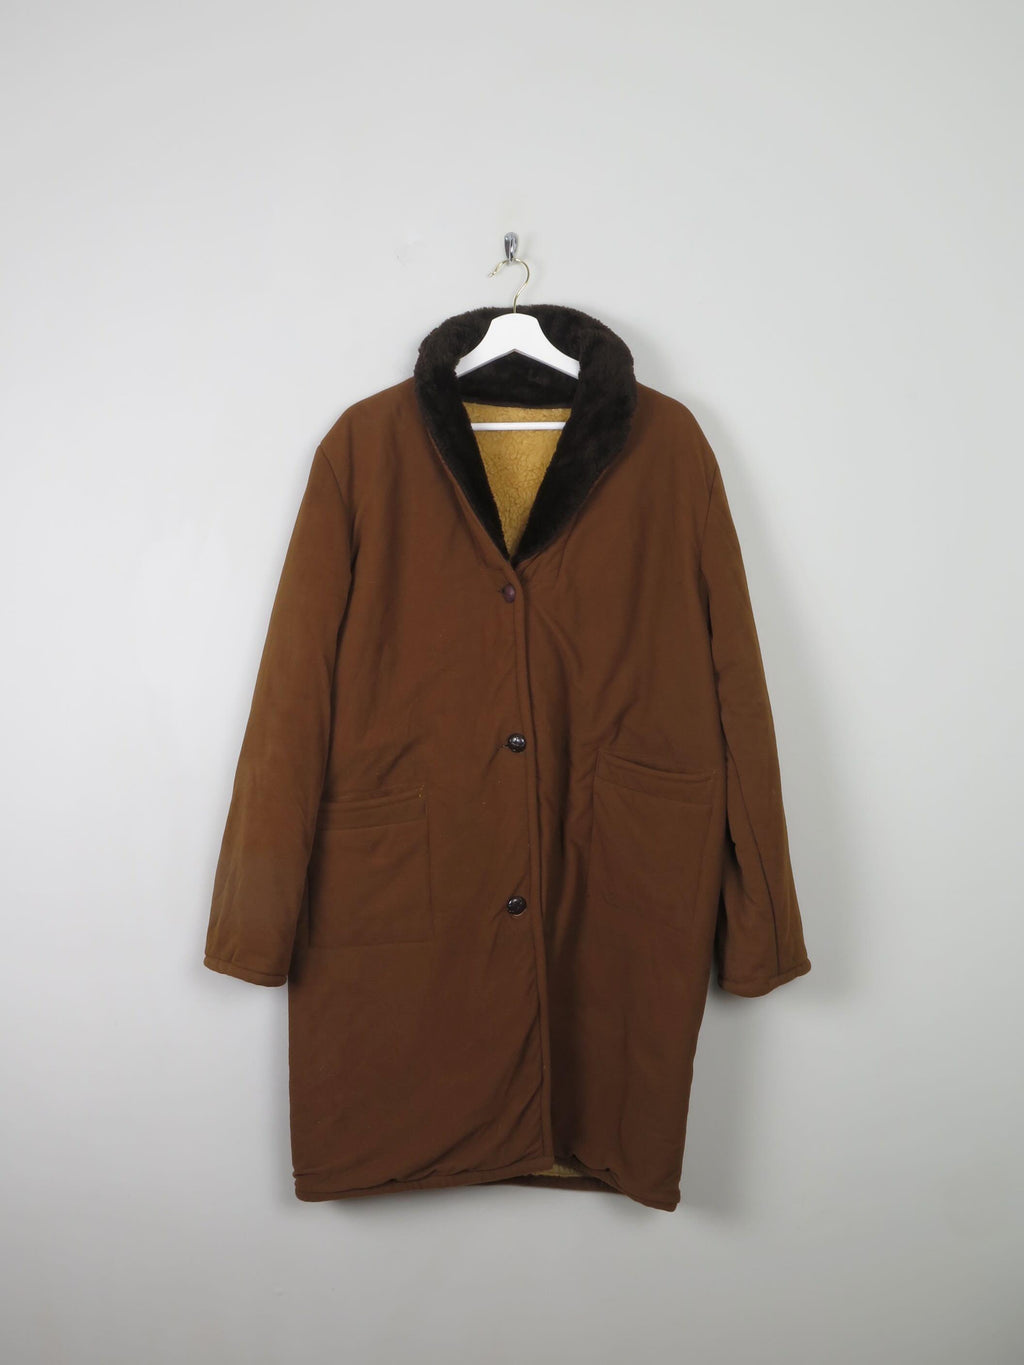 Women's 1960s Faux Sheepskin Style Coat M/L - The Harlequin